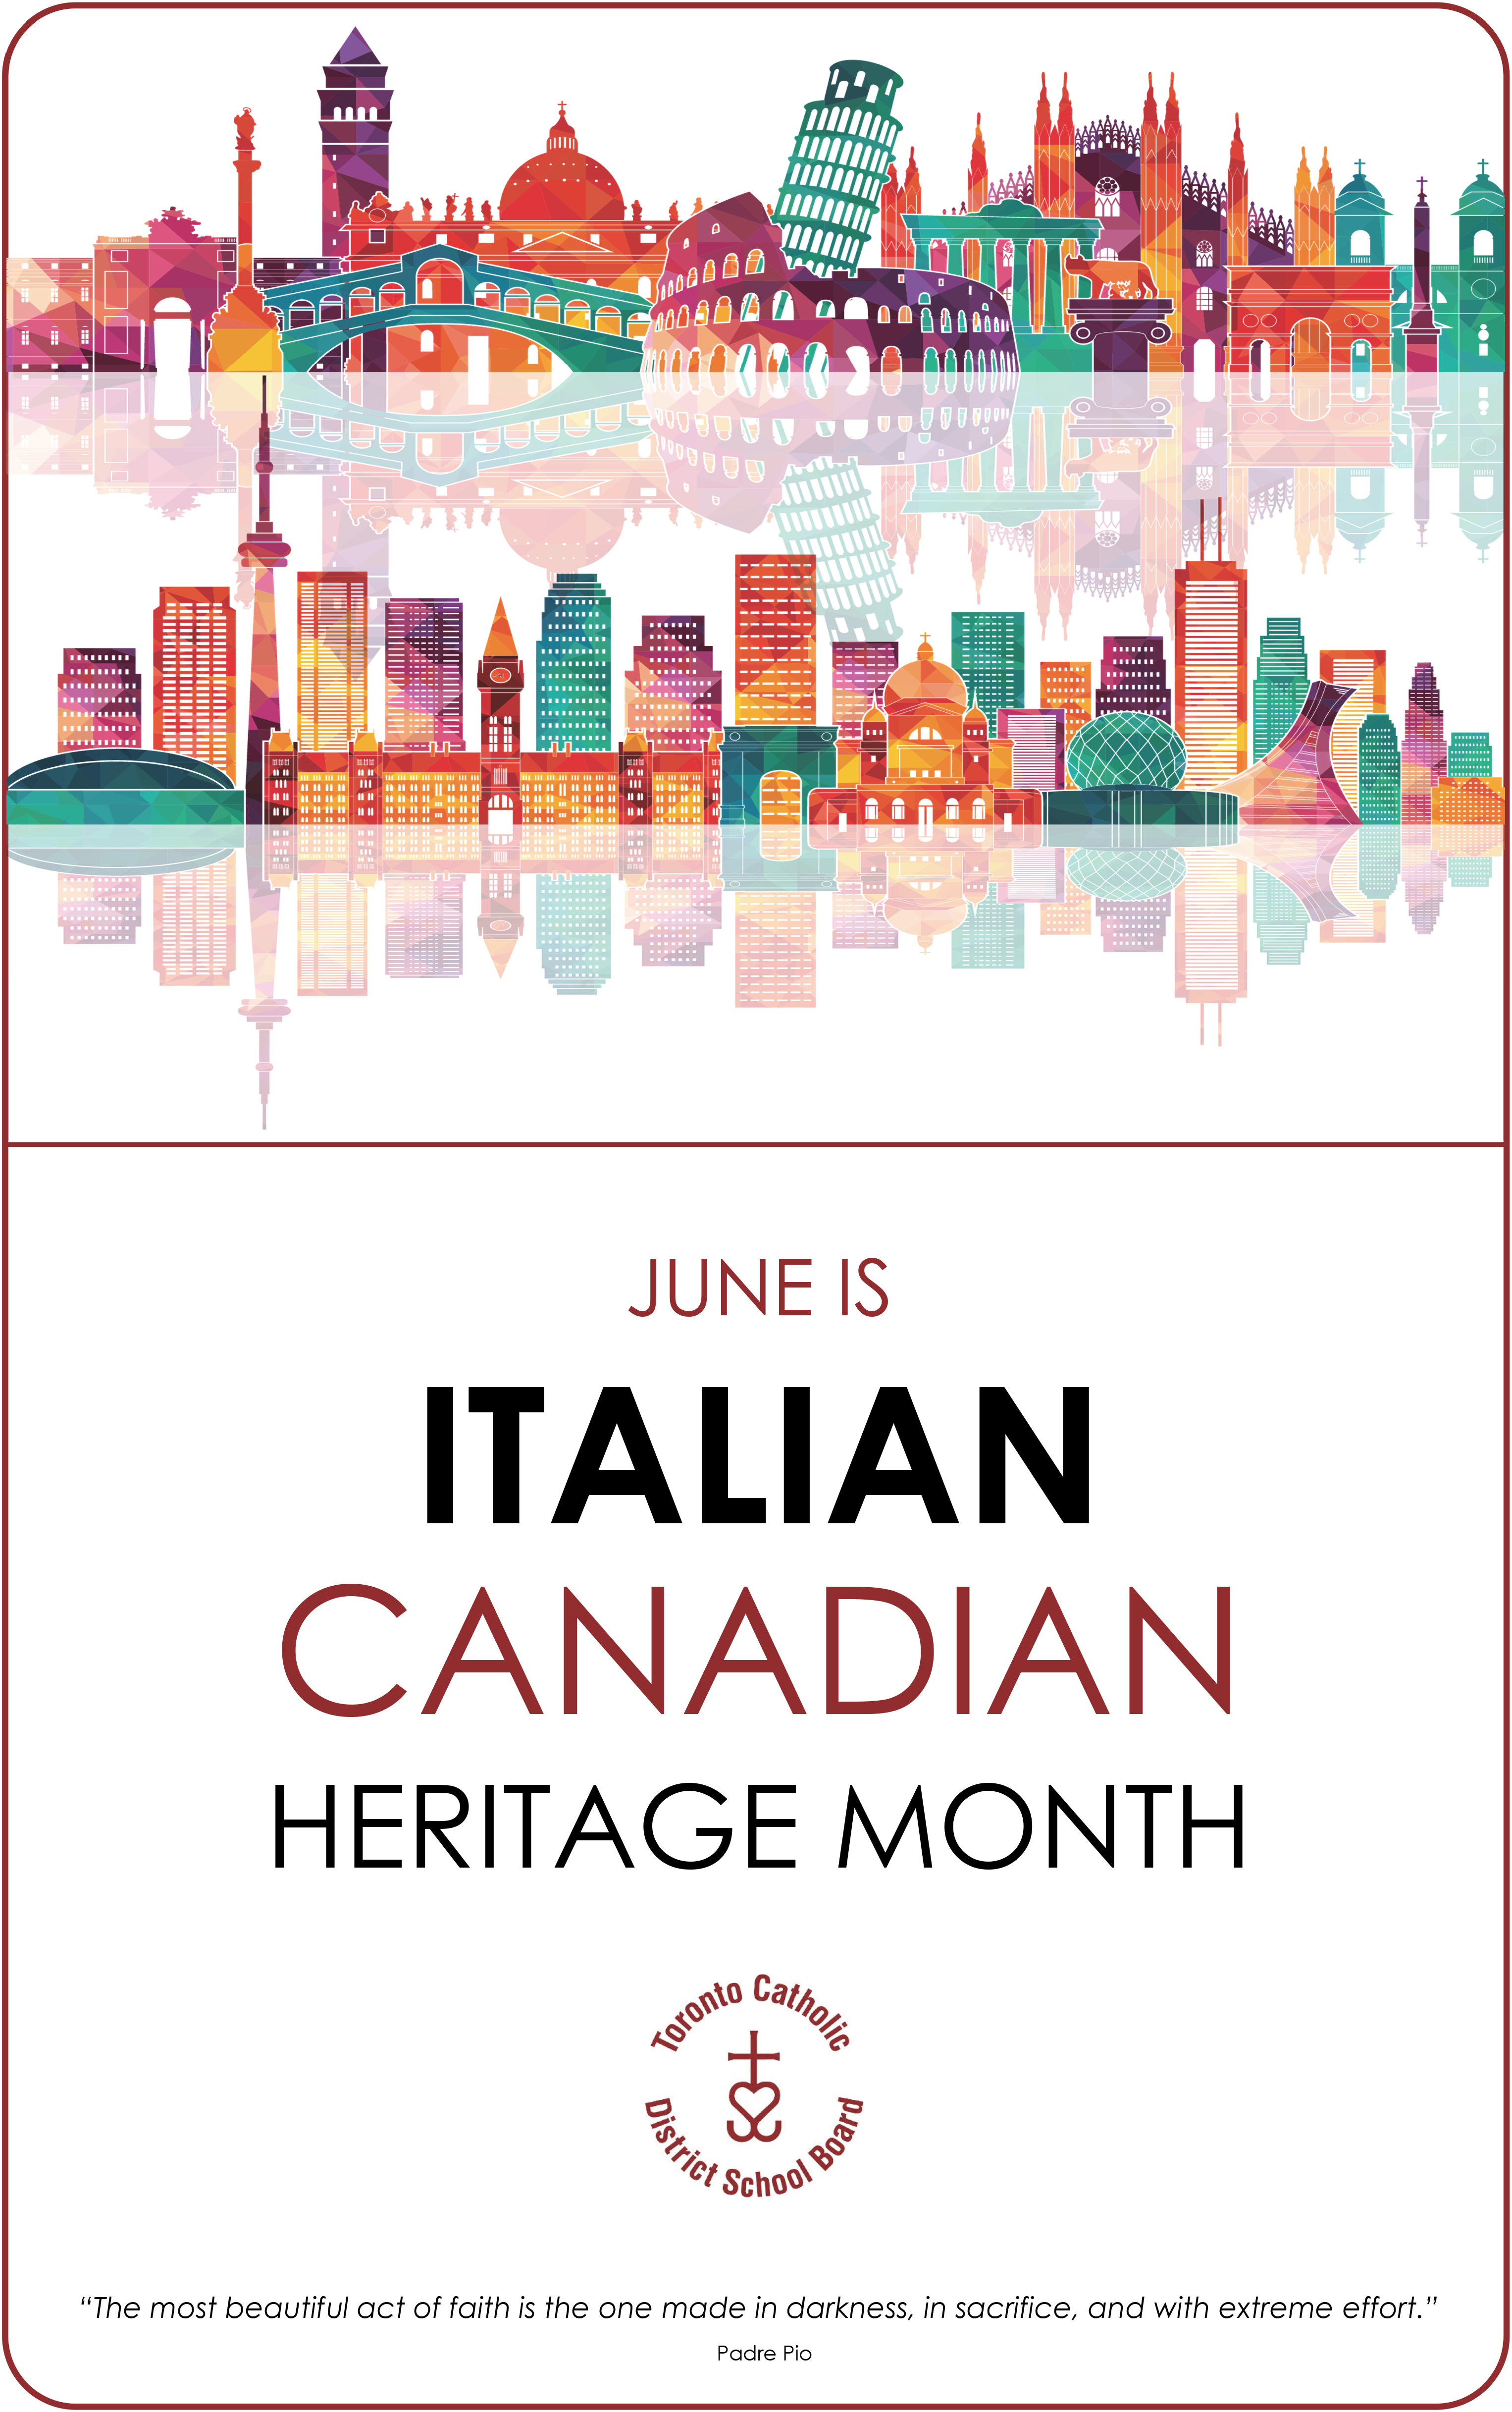 June is Italian Canadian Heritage Month